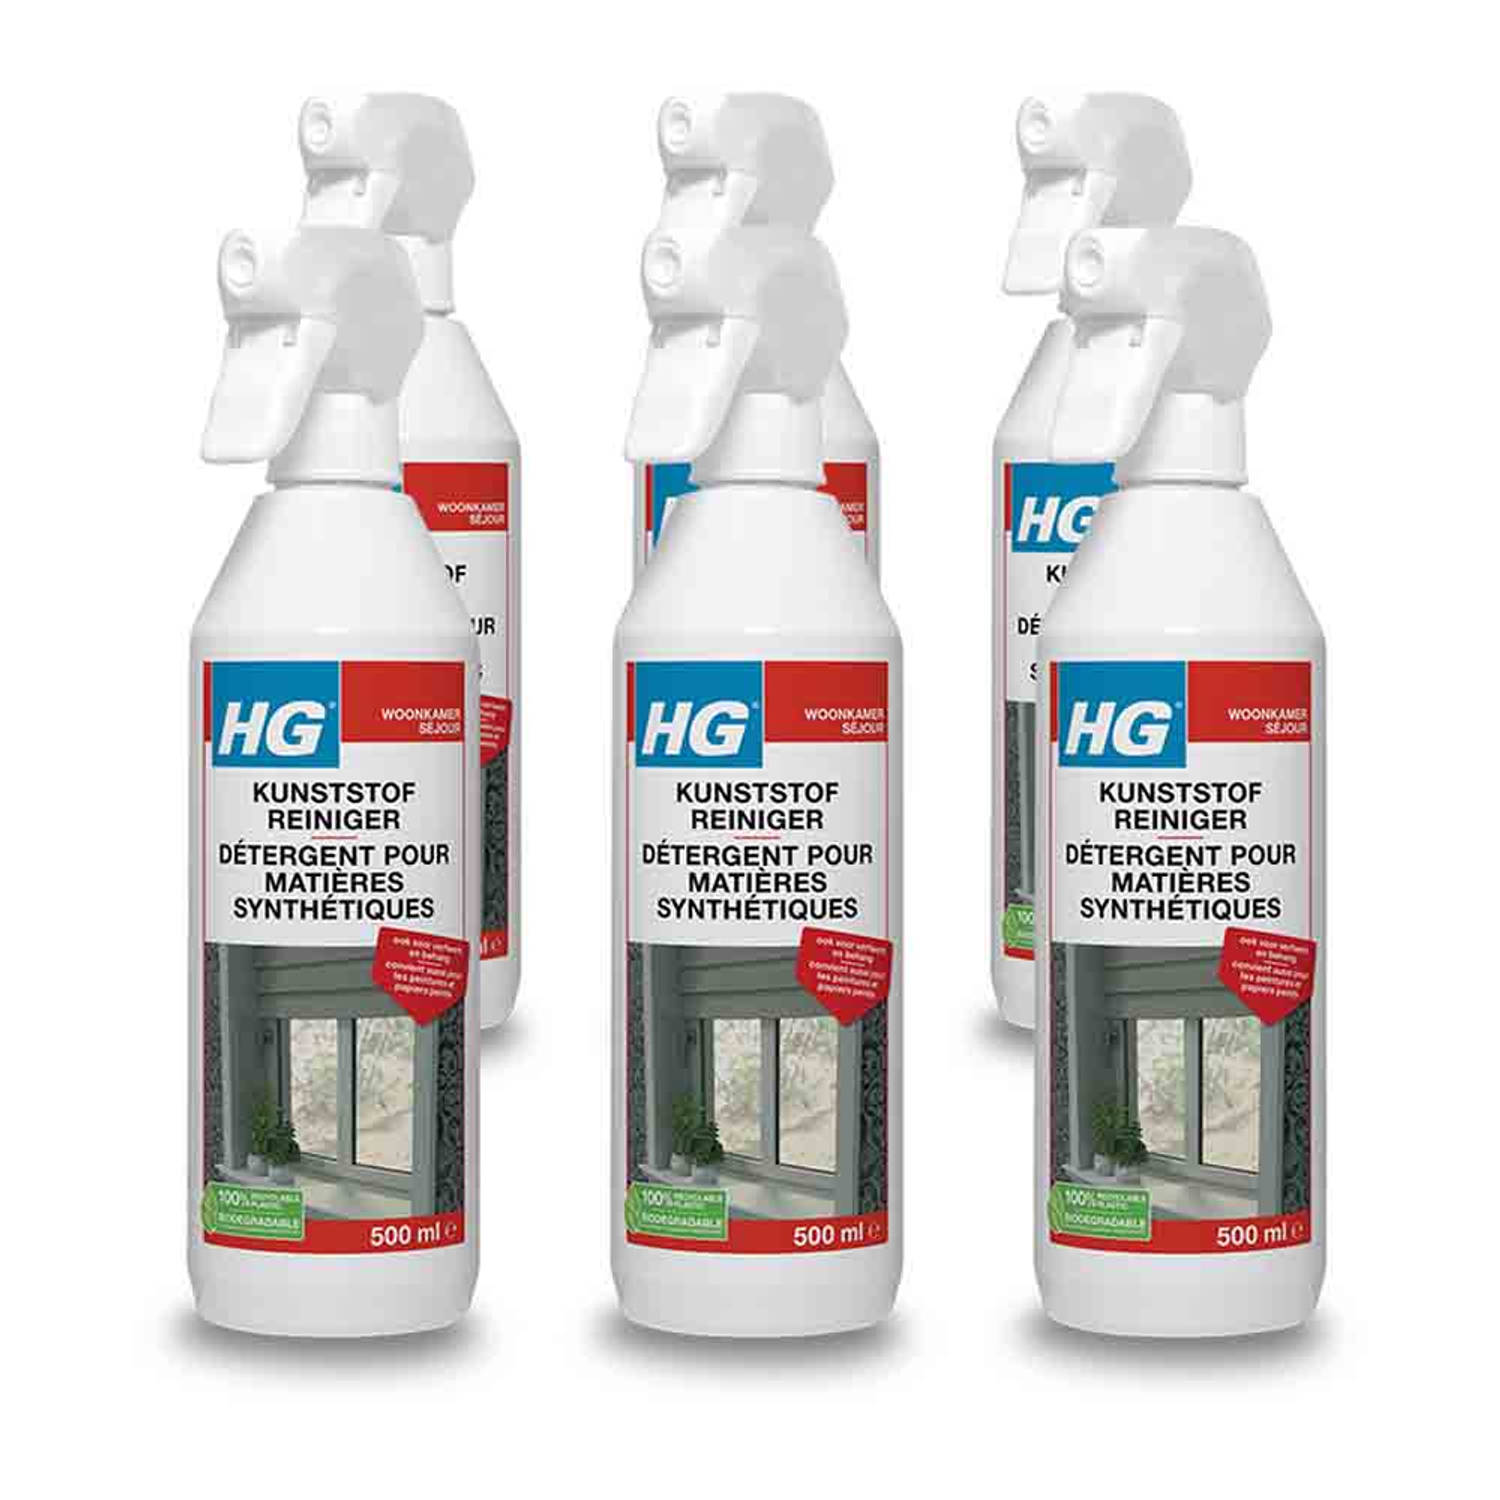 HG kunststof reiniger 500 ml - 6 stuks